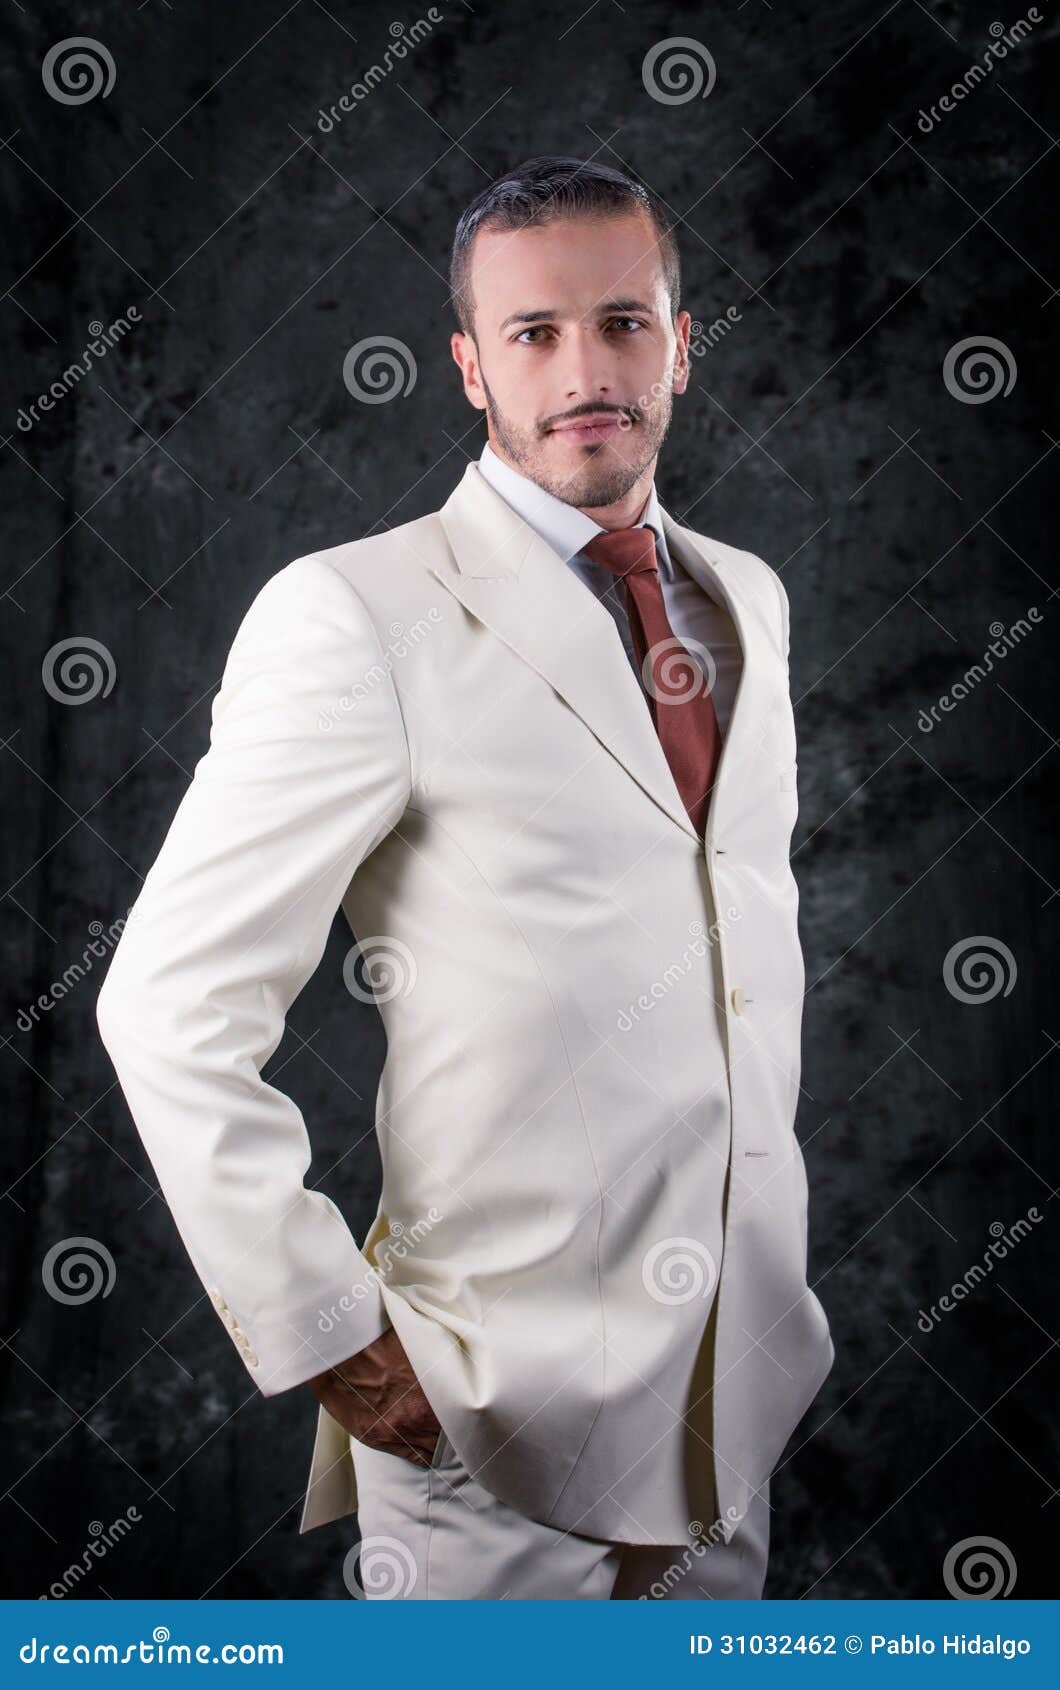 fashion style photo man white suit wearing 31032462